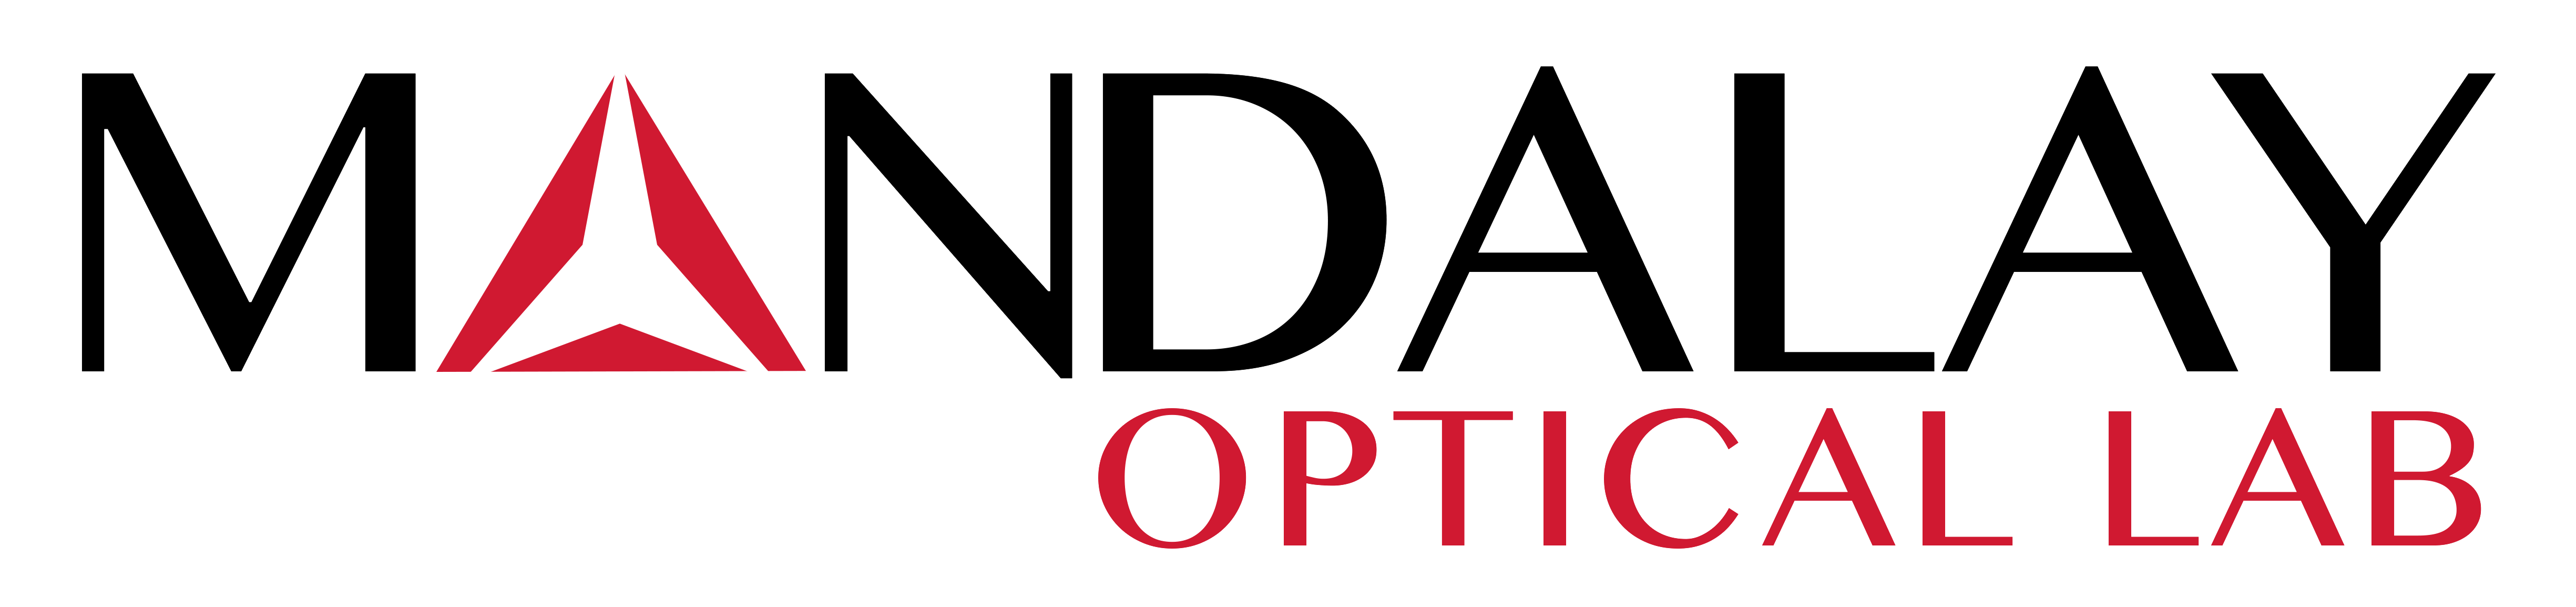 Mandalay-Optical-Lab-Logo-Official